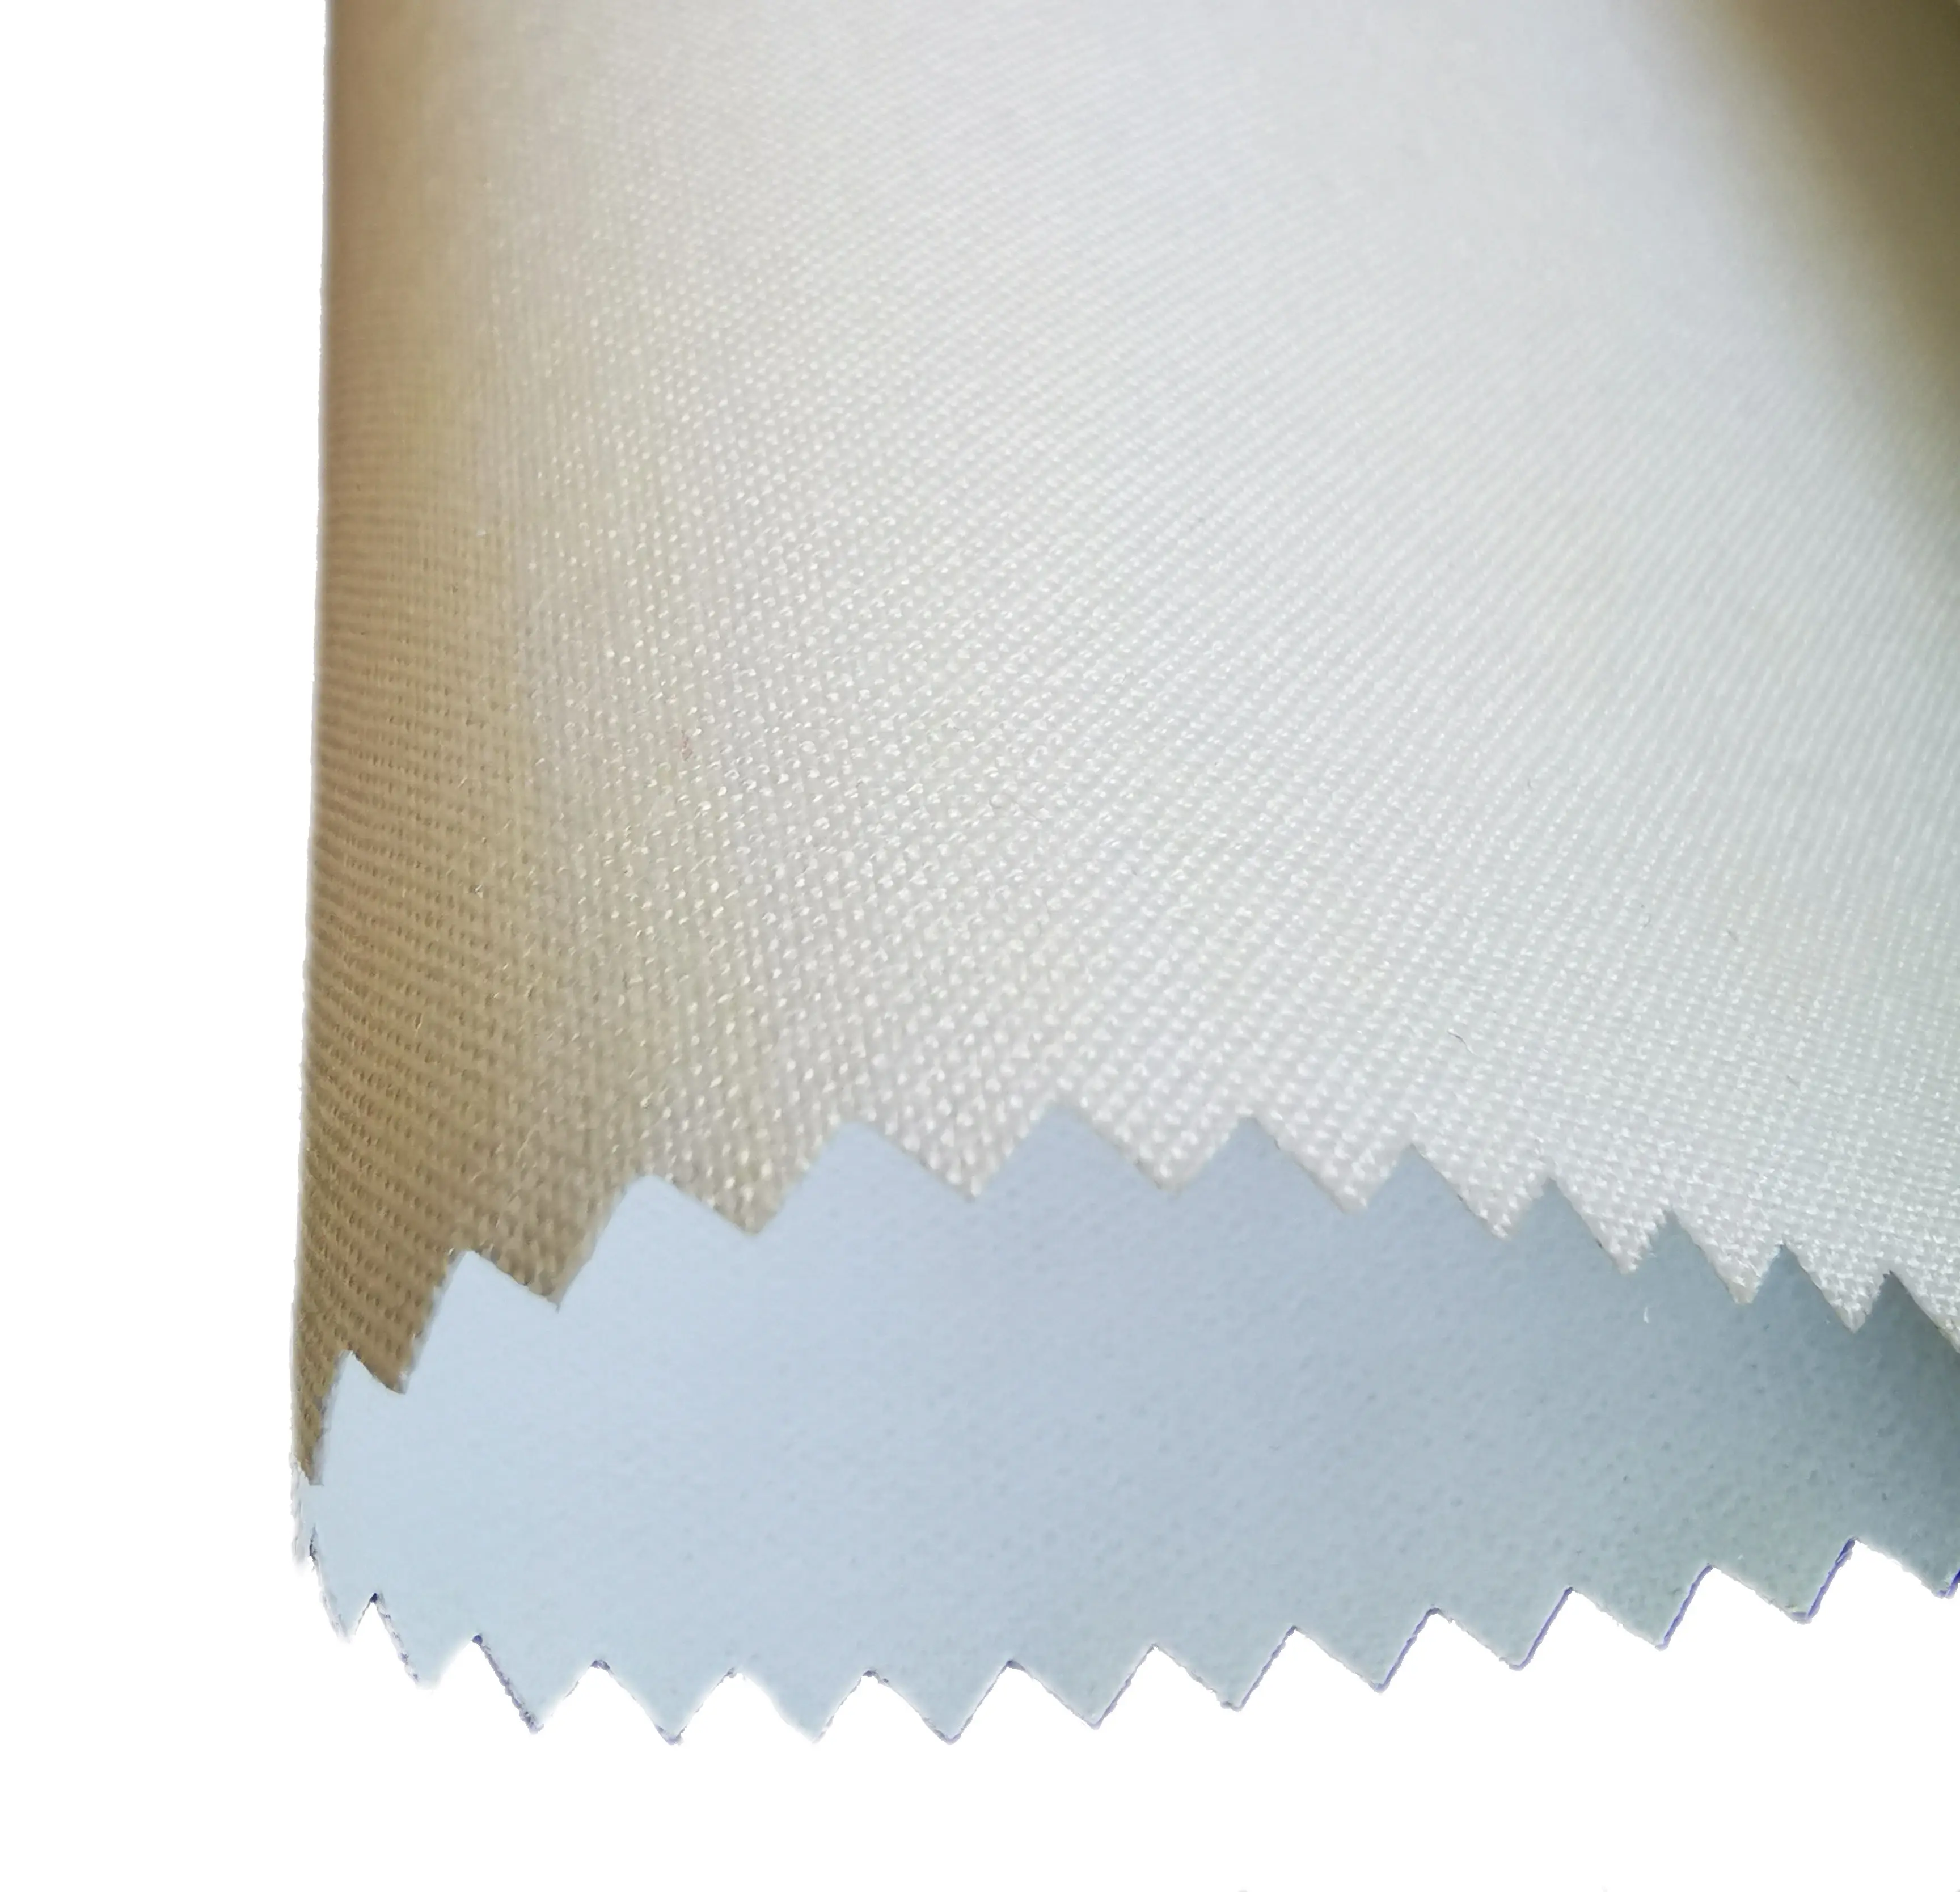 Flame retardant fabric, 95% Meta aramid 5% Para aramid fire resistant waterproof fabric ,EN 469 standard